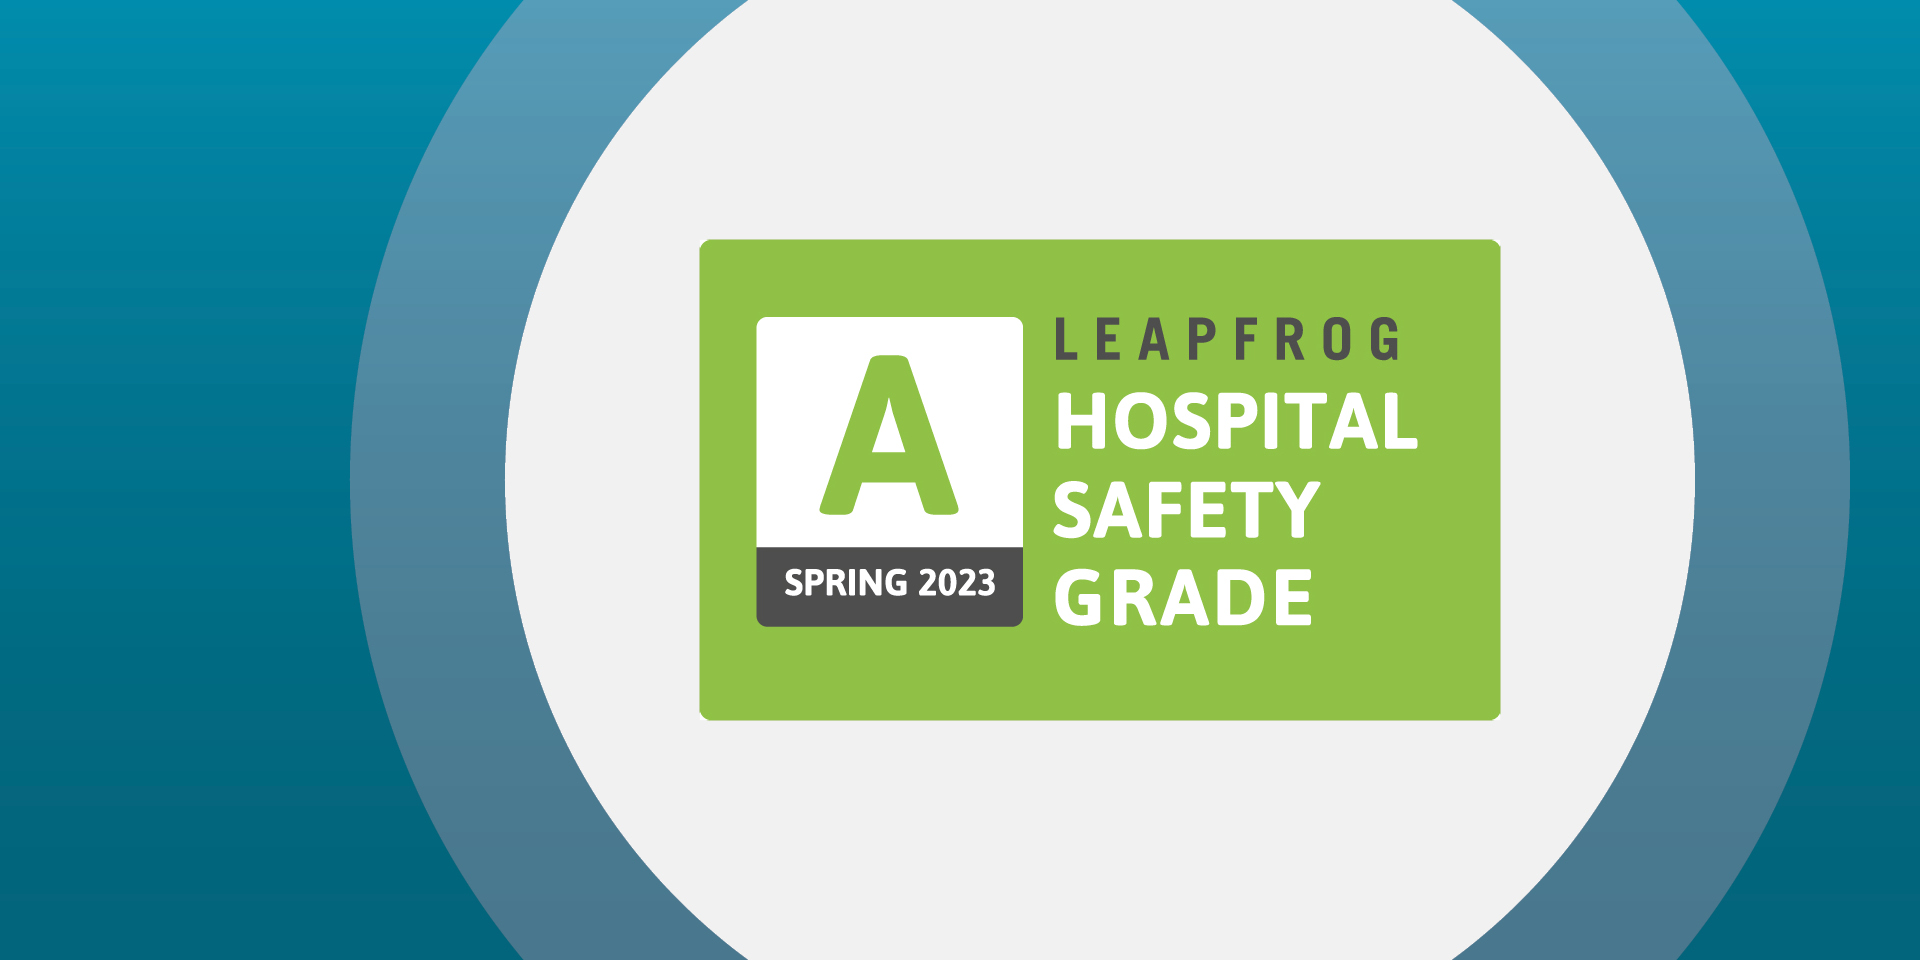 Spring 2023 Logo for Leapfrog Hospital A Safety Grade.